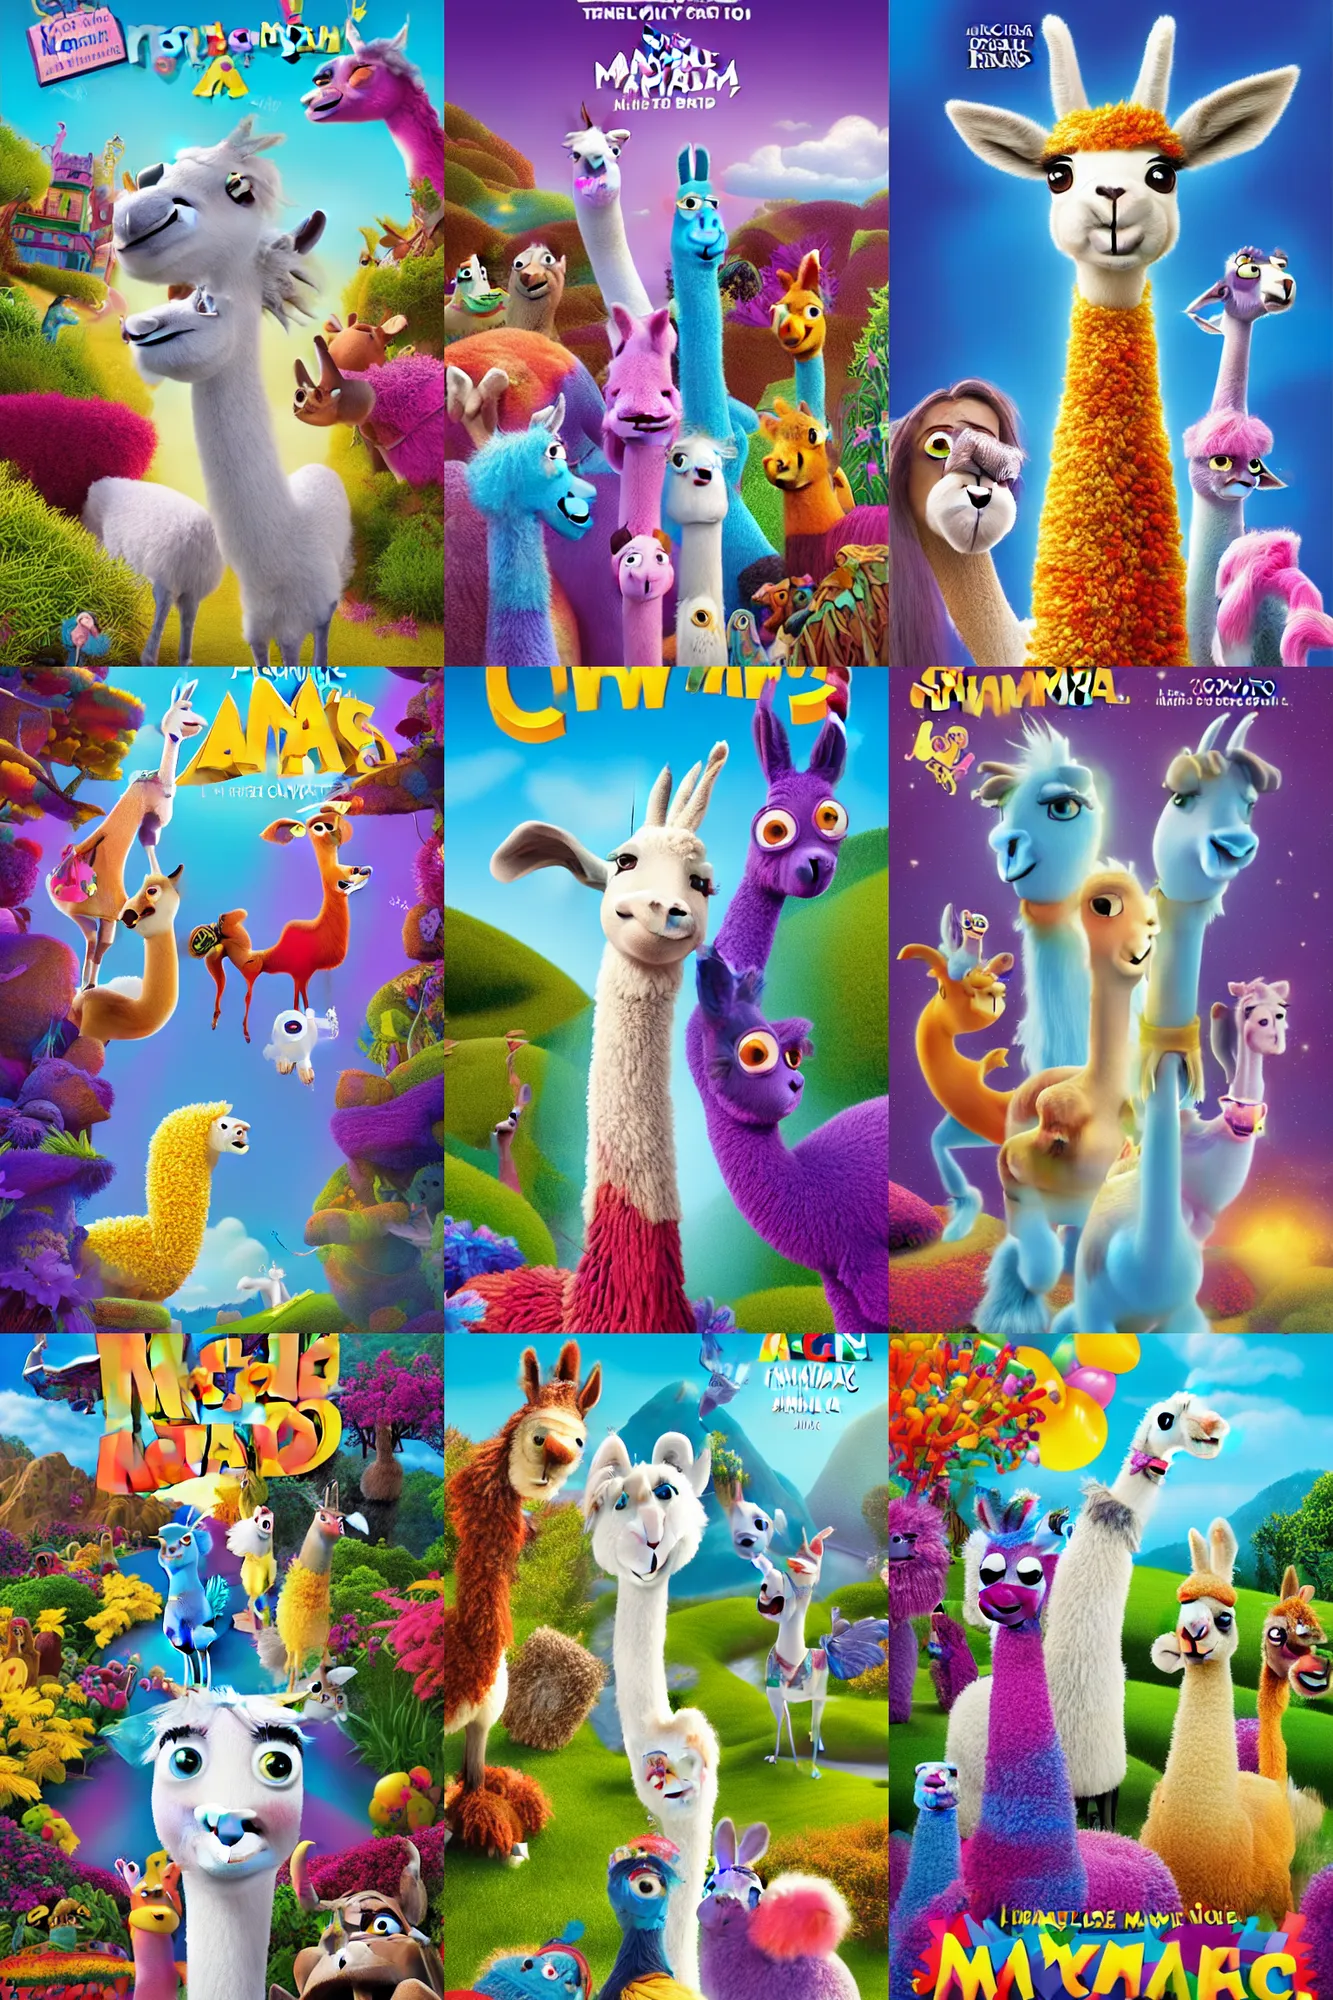 Prompt: Magical Llama, Pixar movie, DVD cover